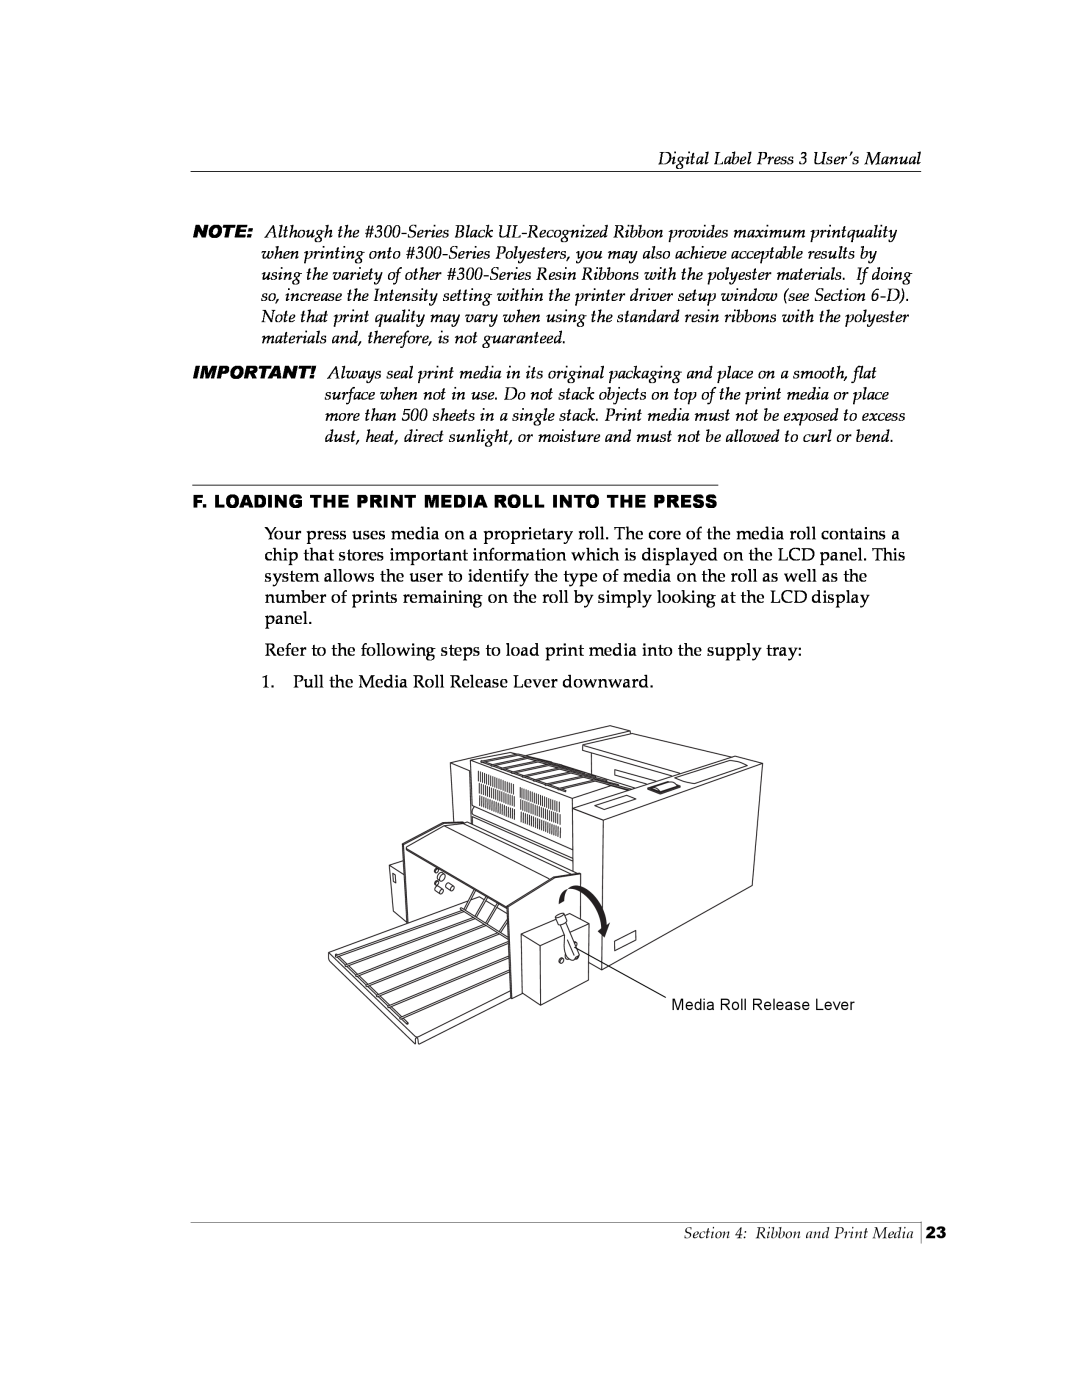 Primera Technology 510212 manual F. Loading The Print Media Roll Into The Press, Digital Label Press 3 User’s Manual 